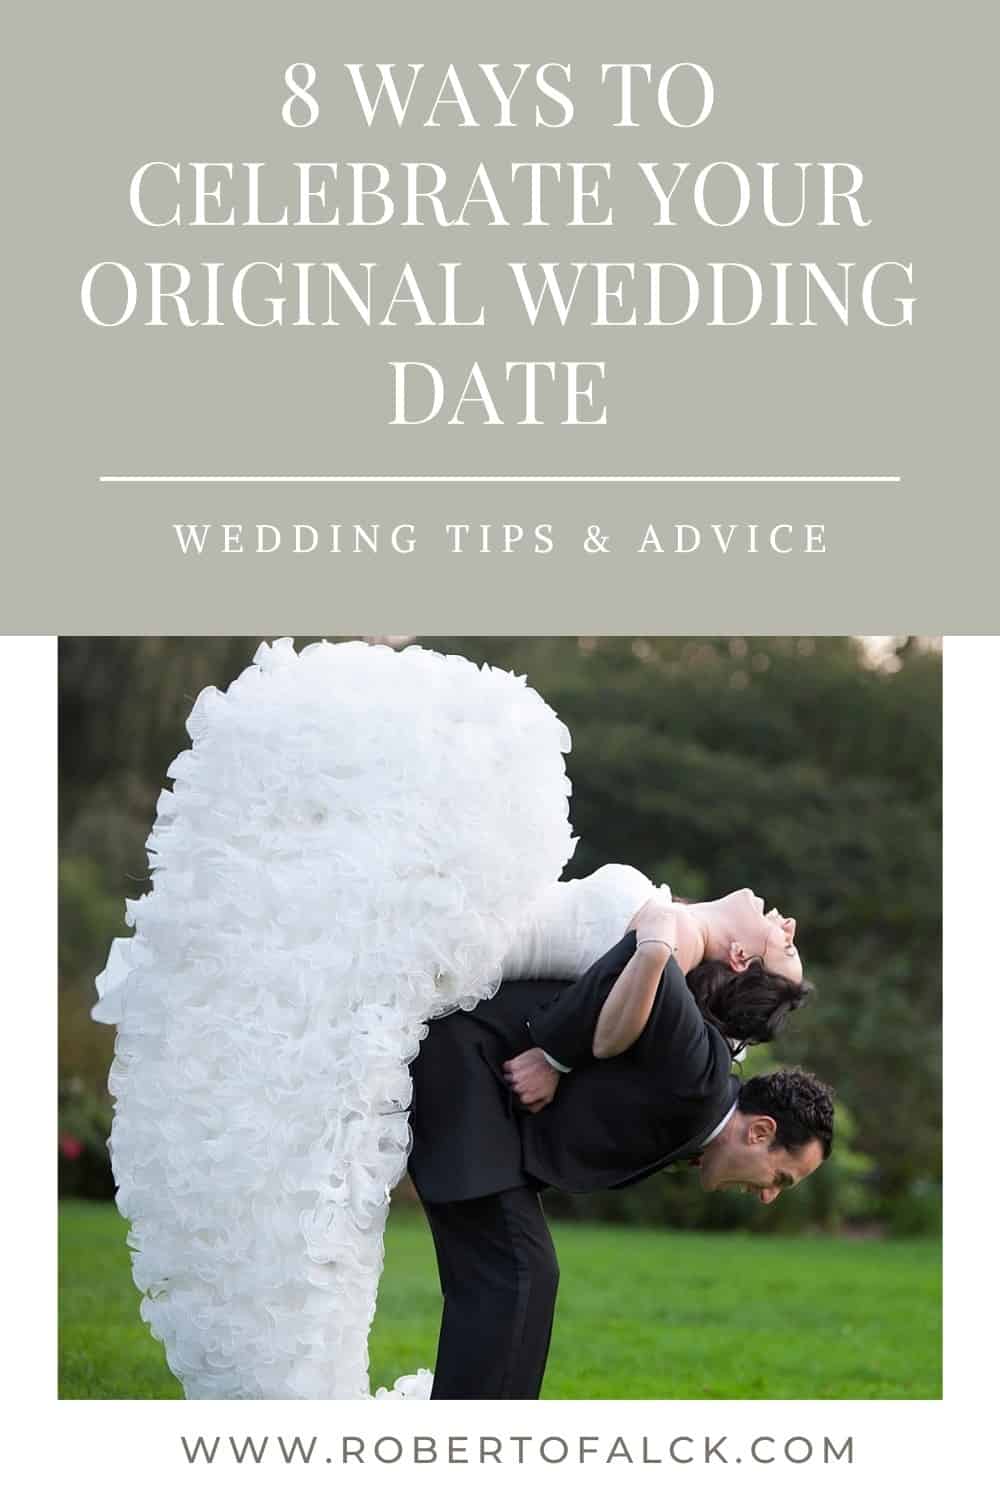 8 Ways to Celebrate Your Original Wedding Date